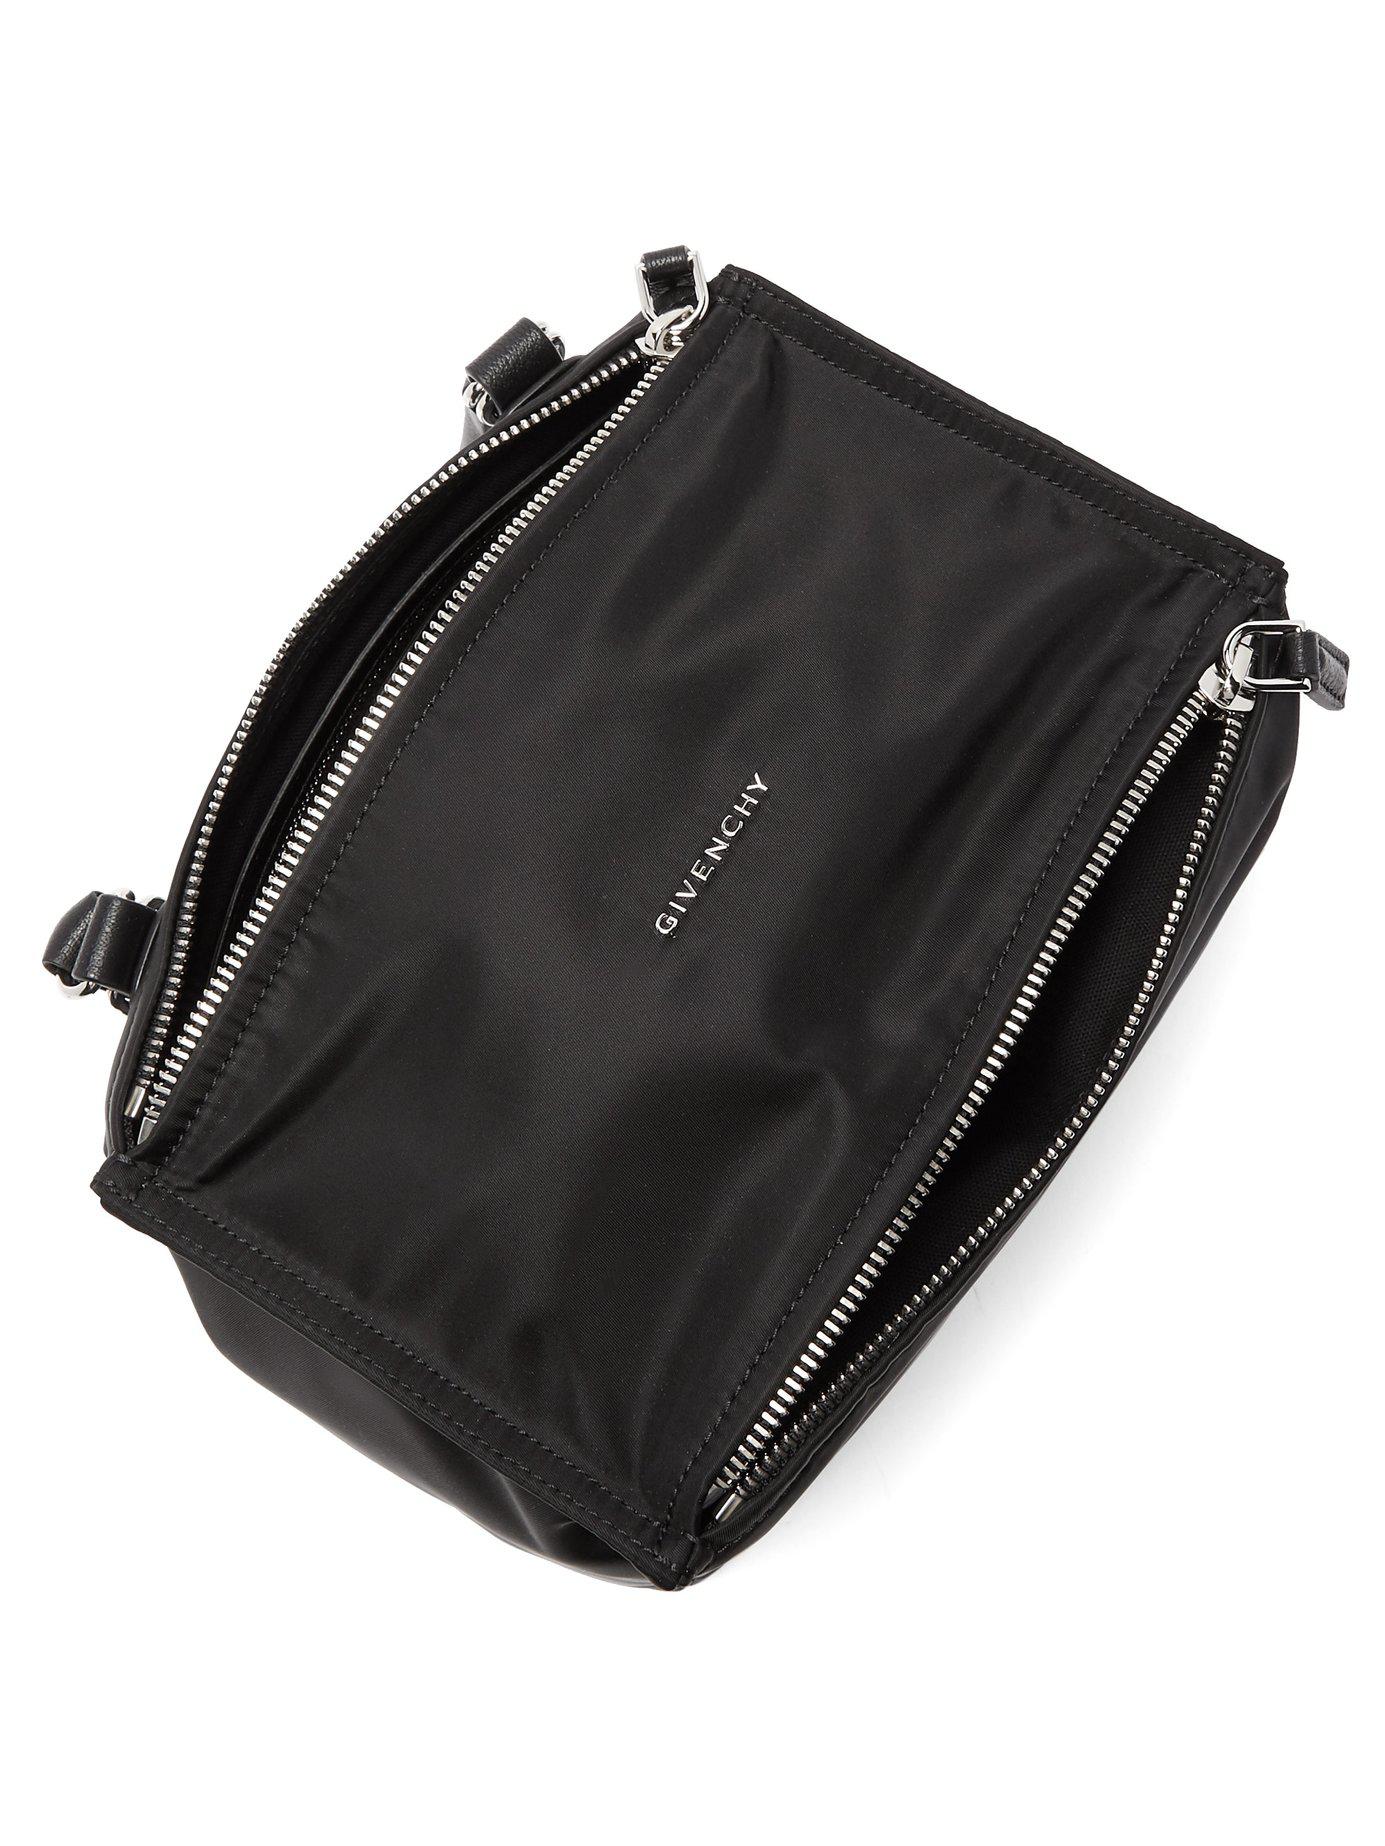 Givenchy Pandora Nylon Bag in Black | Lyst